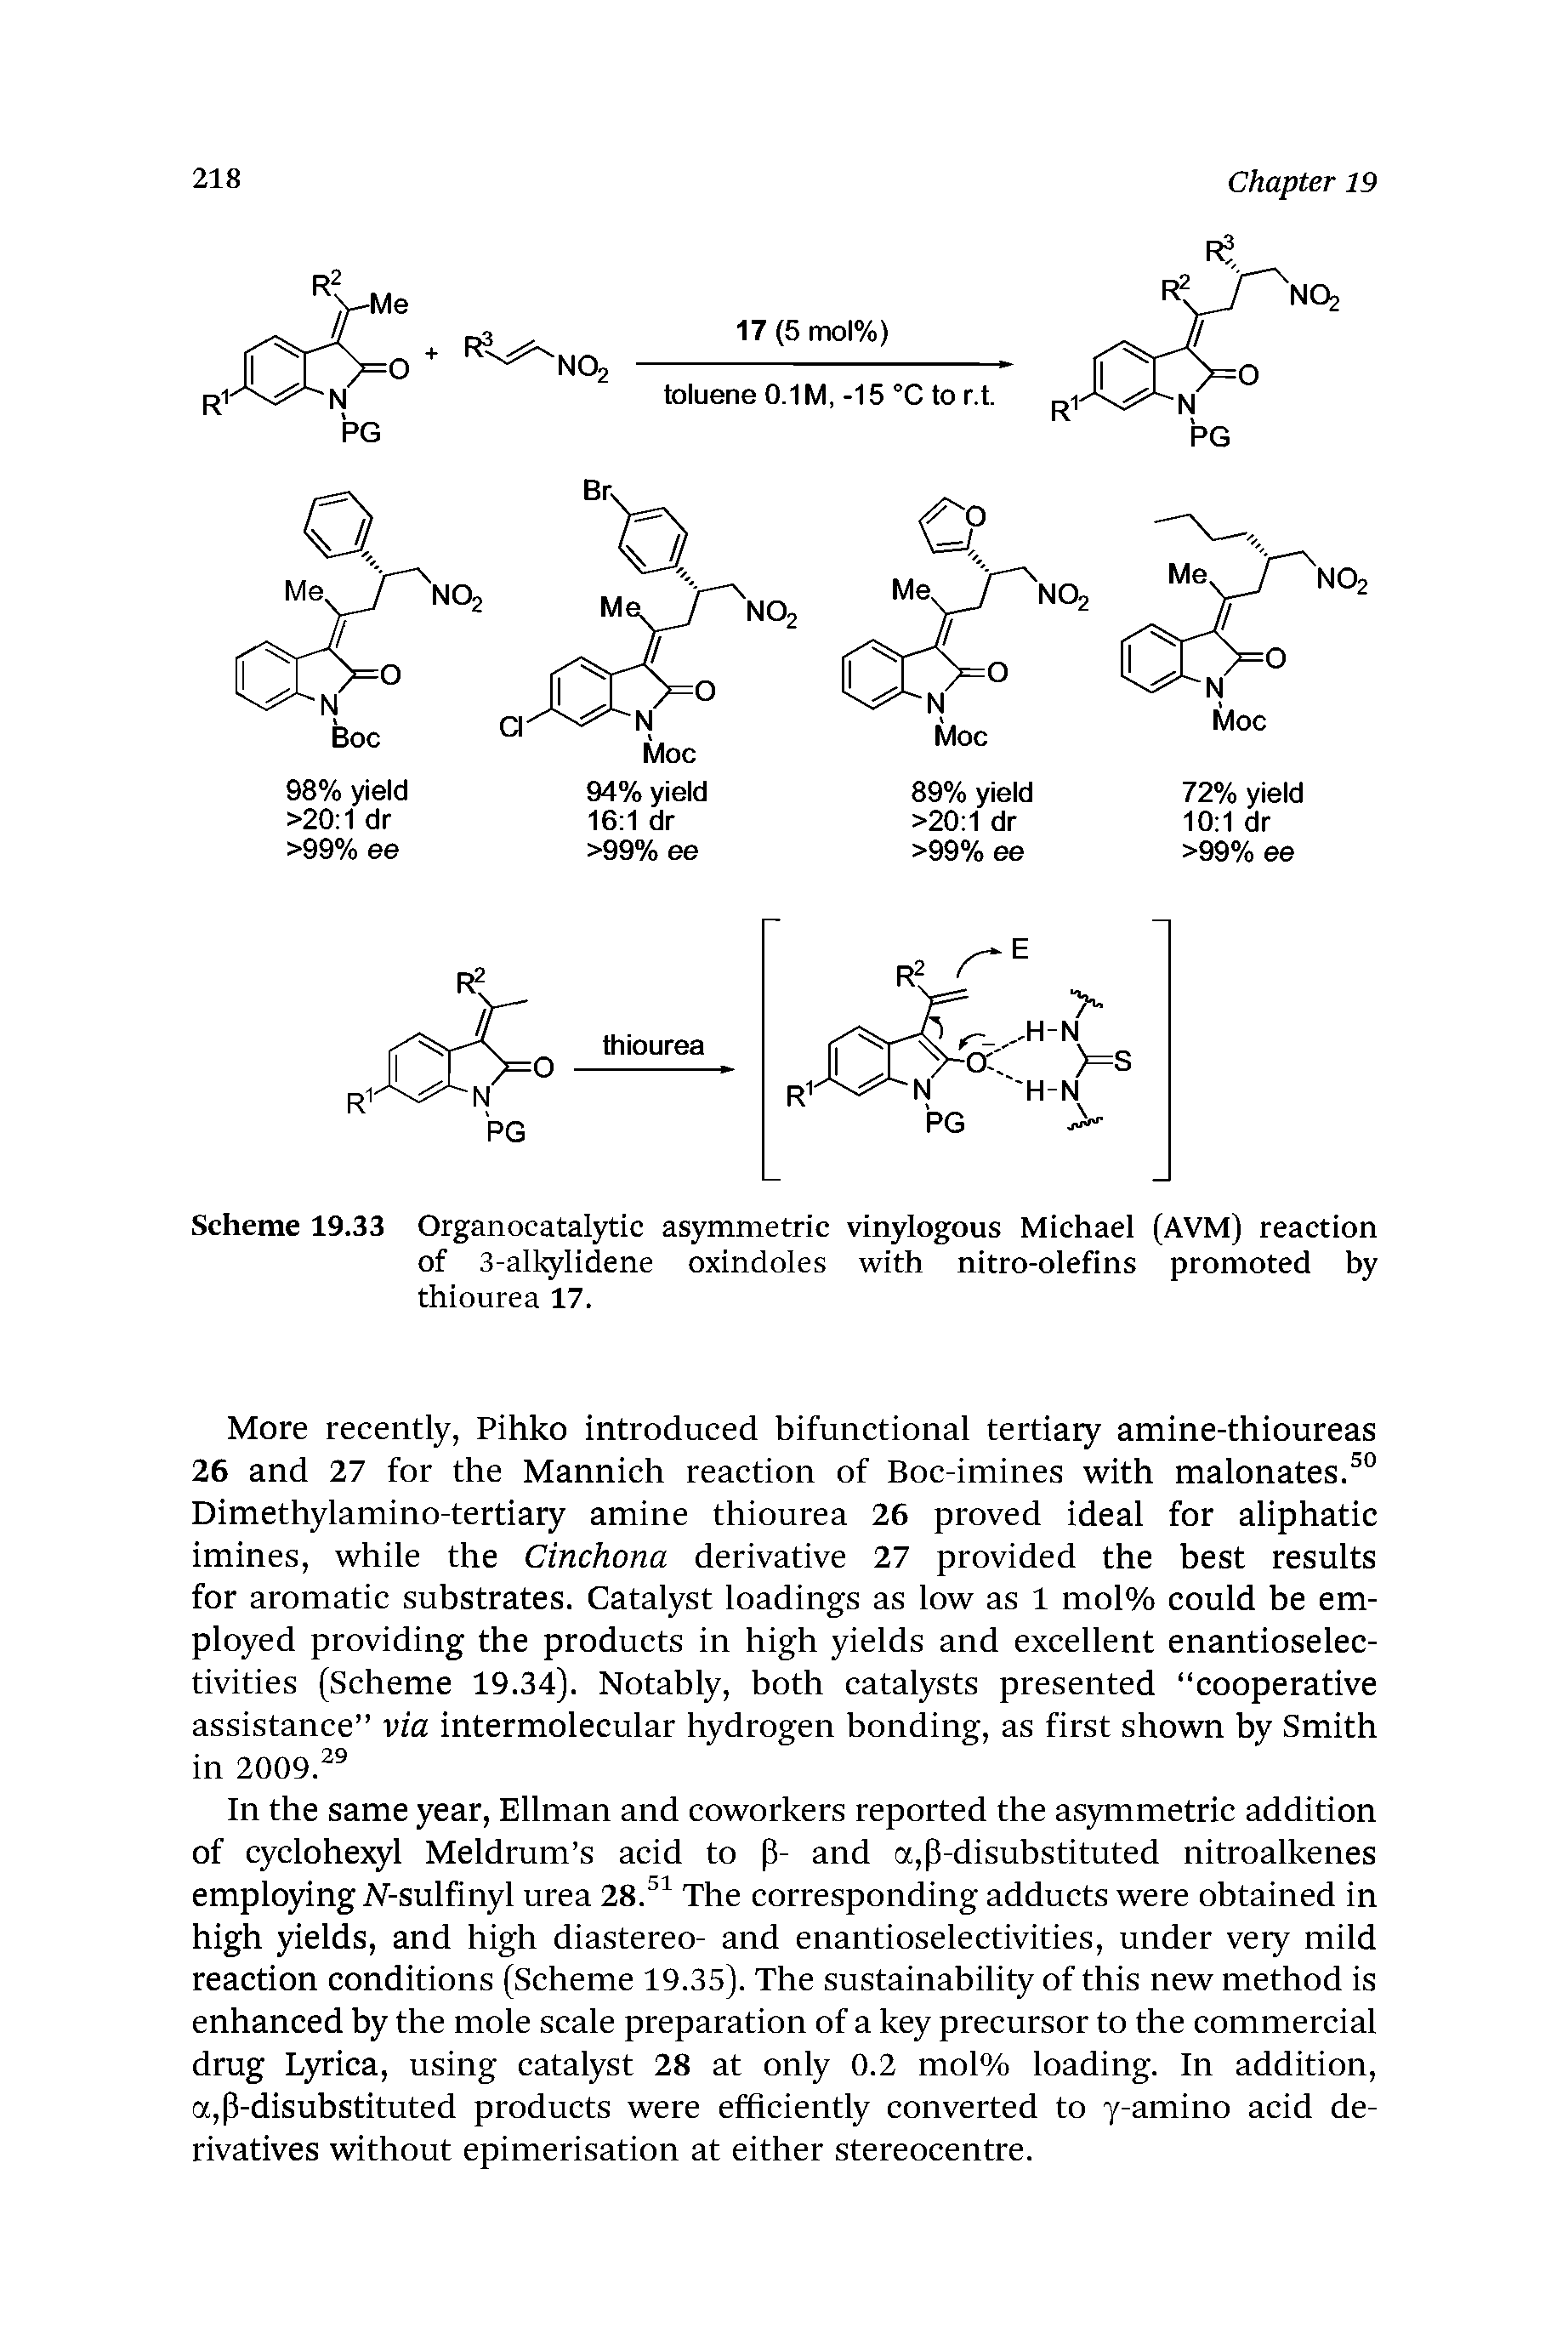 Scheme 19.33 Organocatalytic asymmetric vinylogous Michael (AVM) reaction of 3-alkylidene oxindoles with nitro-olefins promoted by thiourea 17.